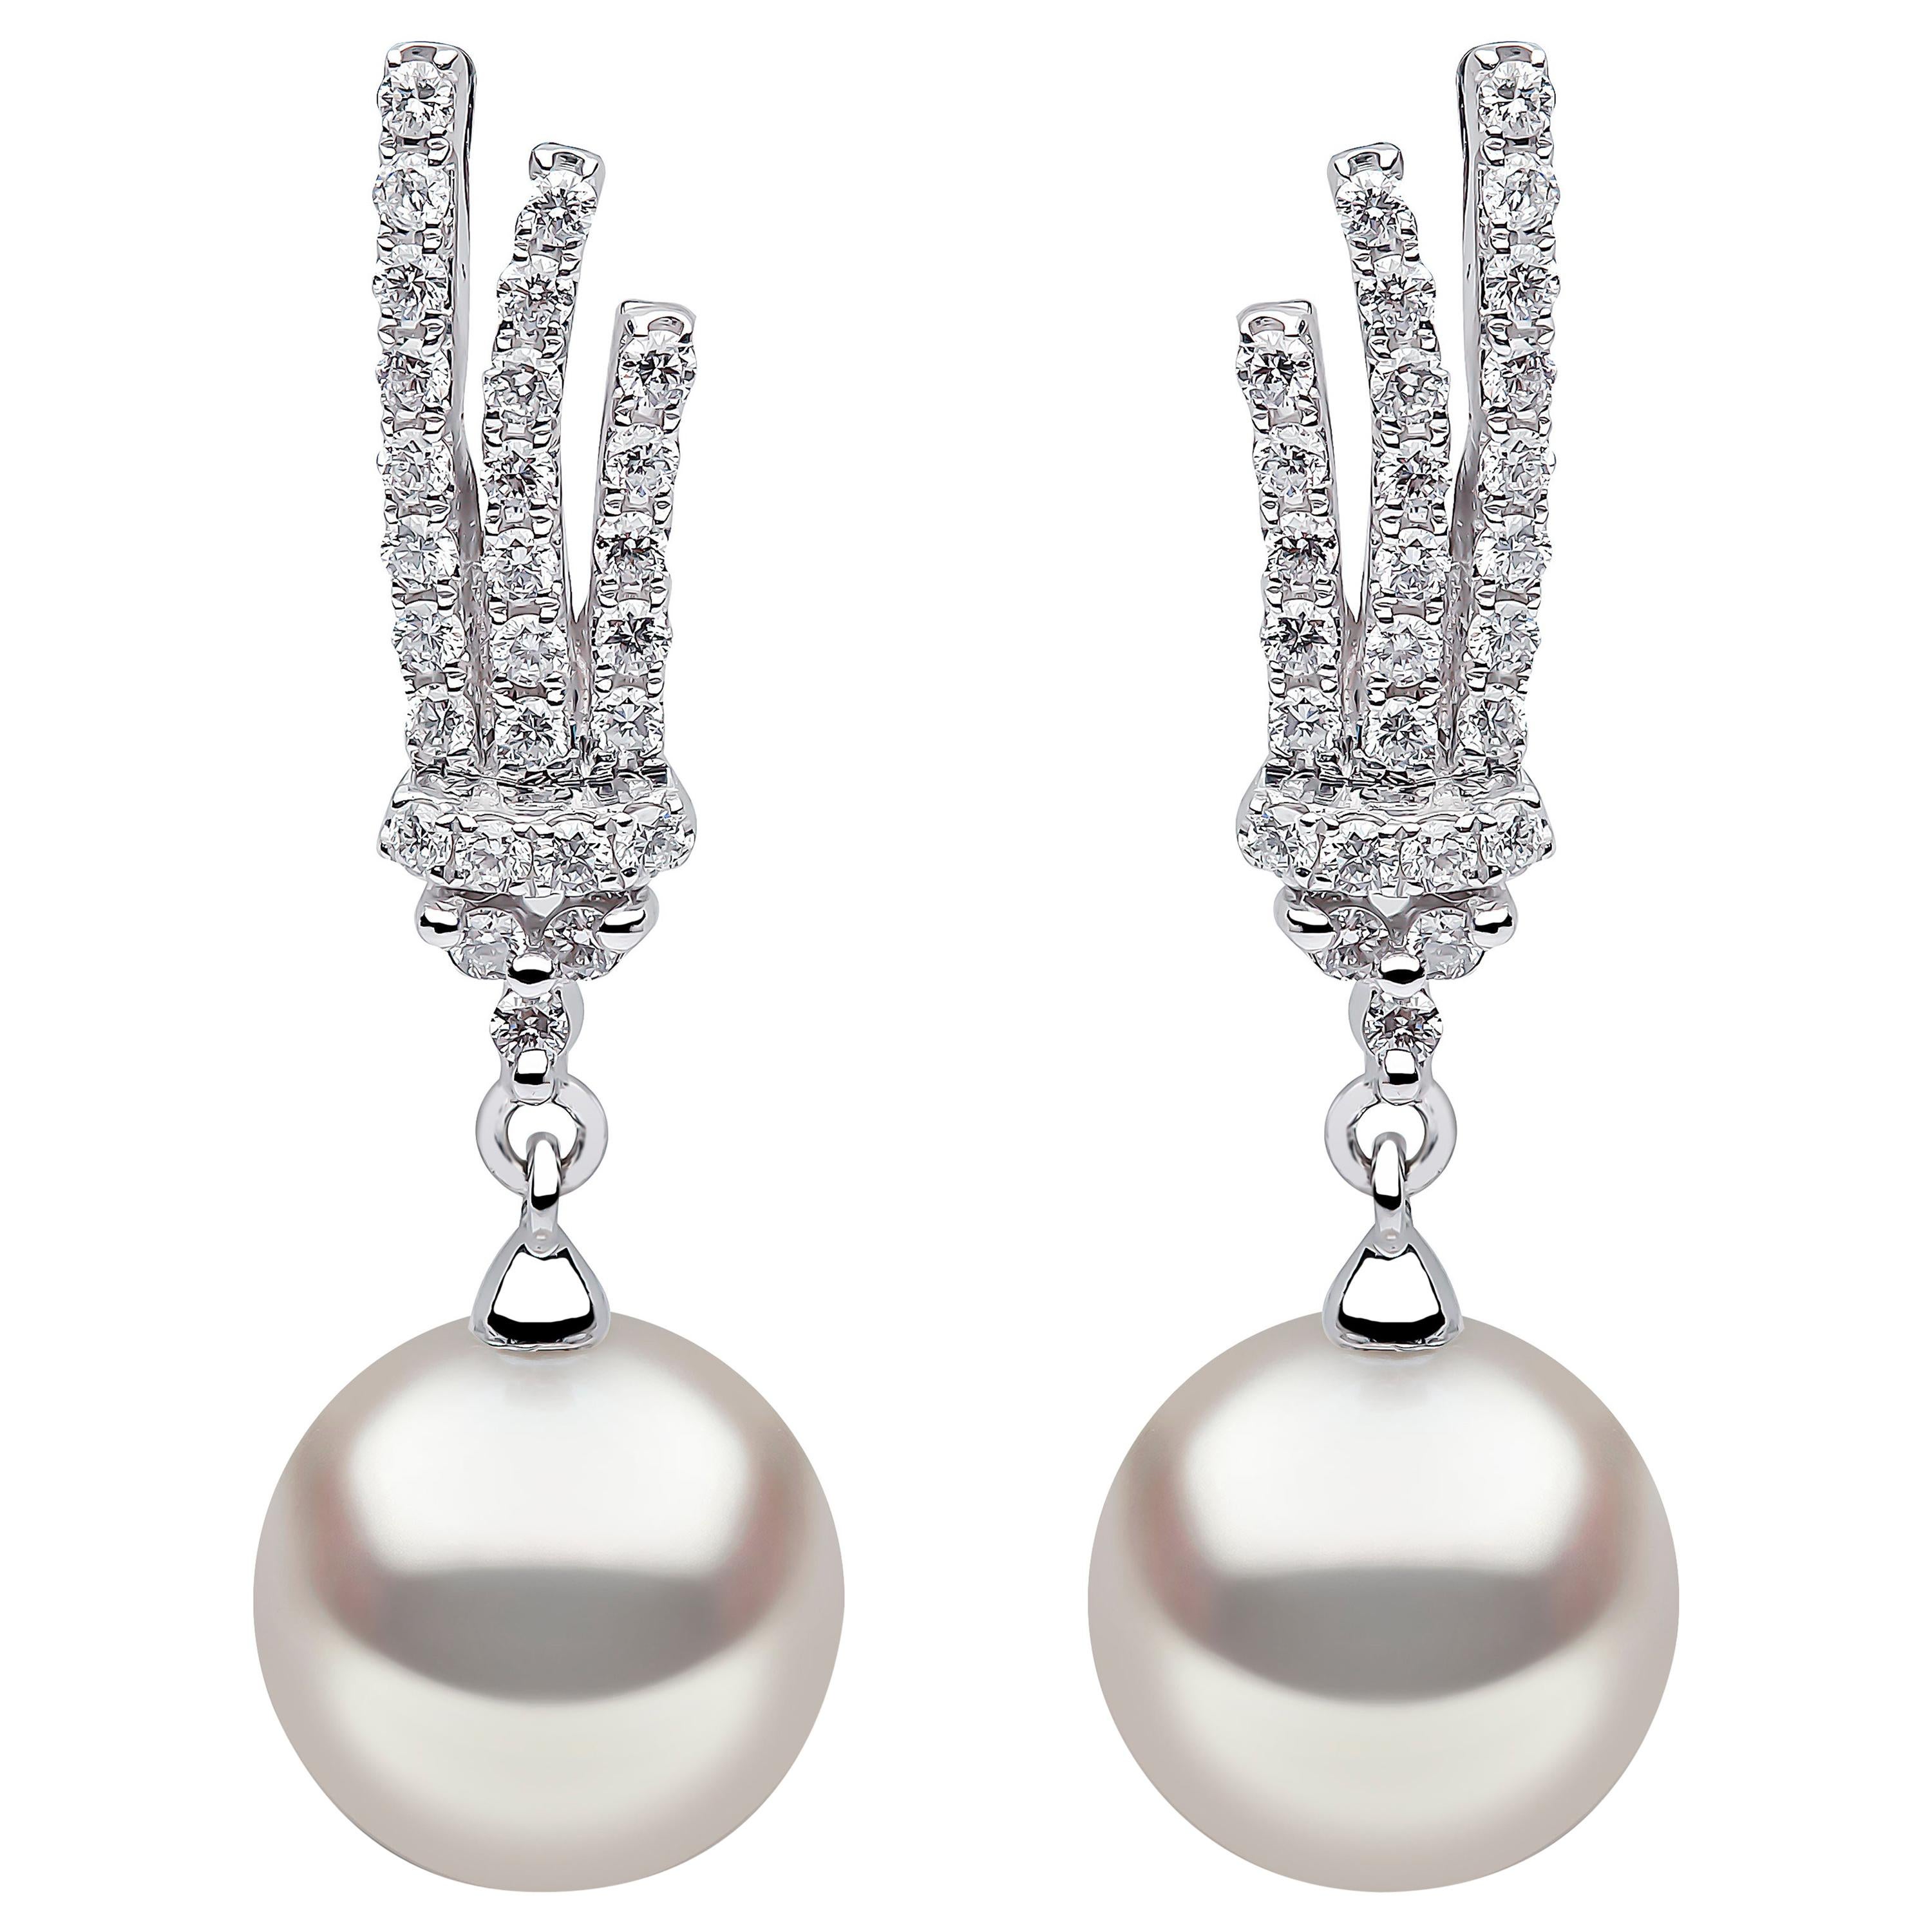 Yoko London Freshwater Pearl and Diamond Earrings in 18 Karat White Gold